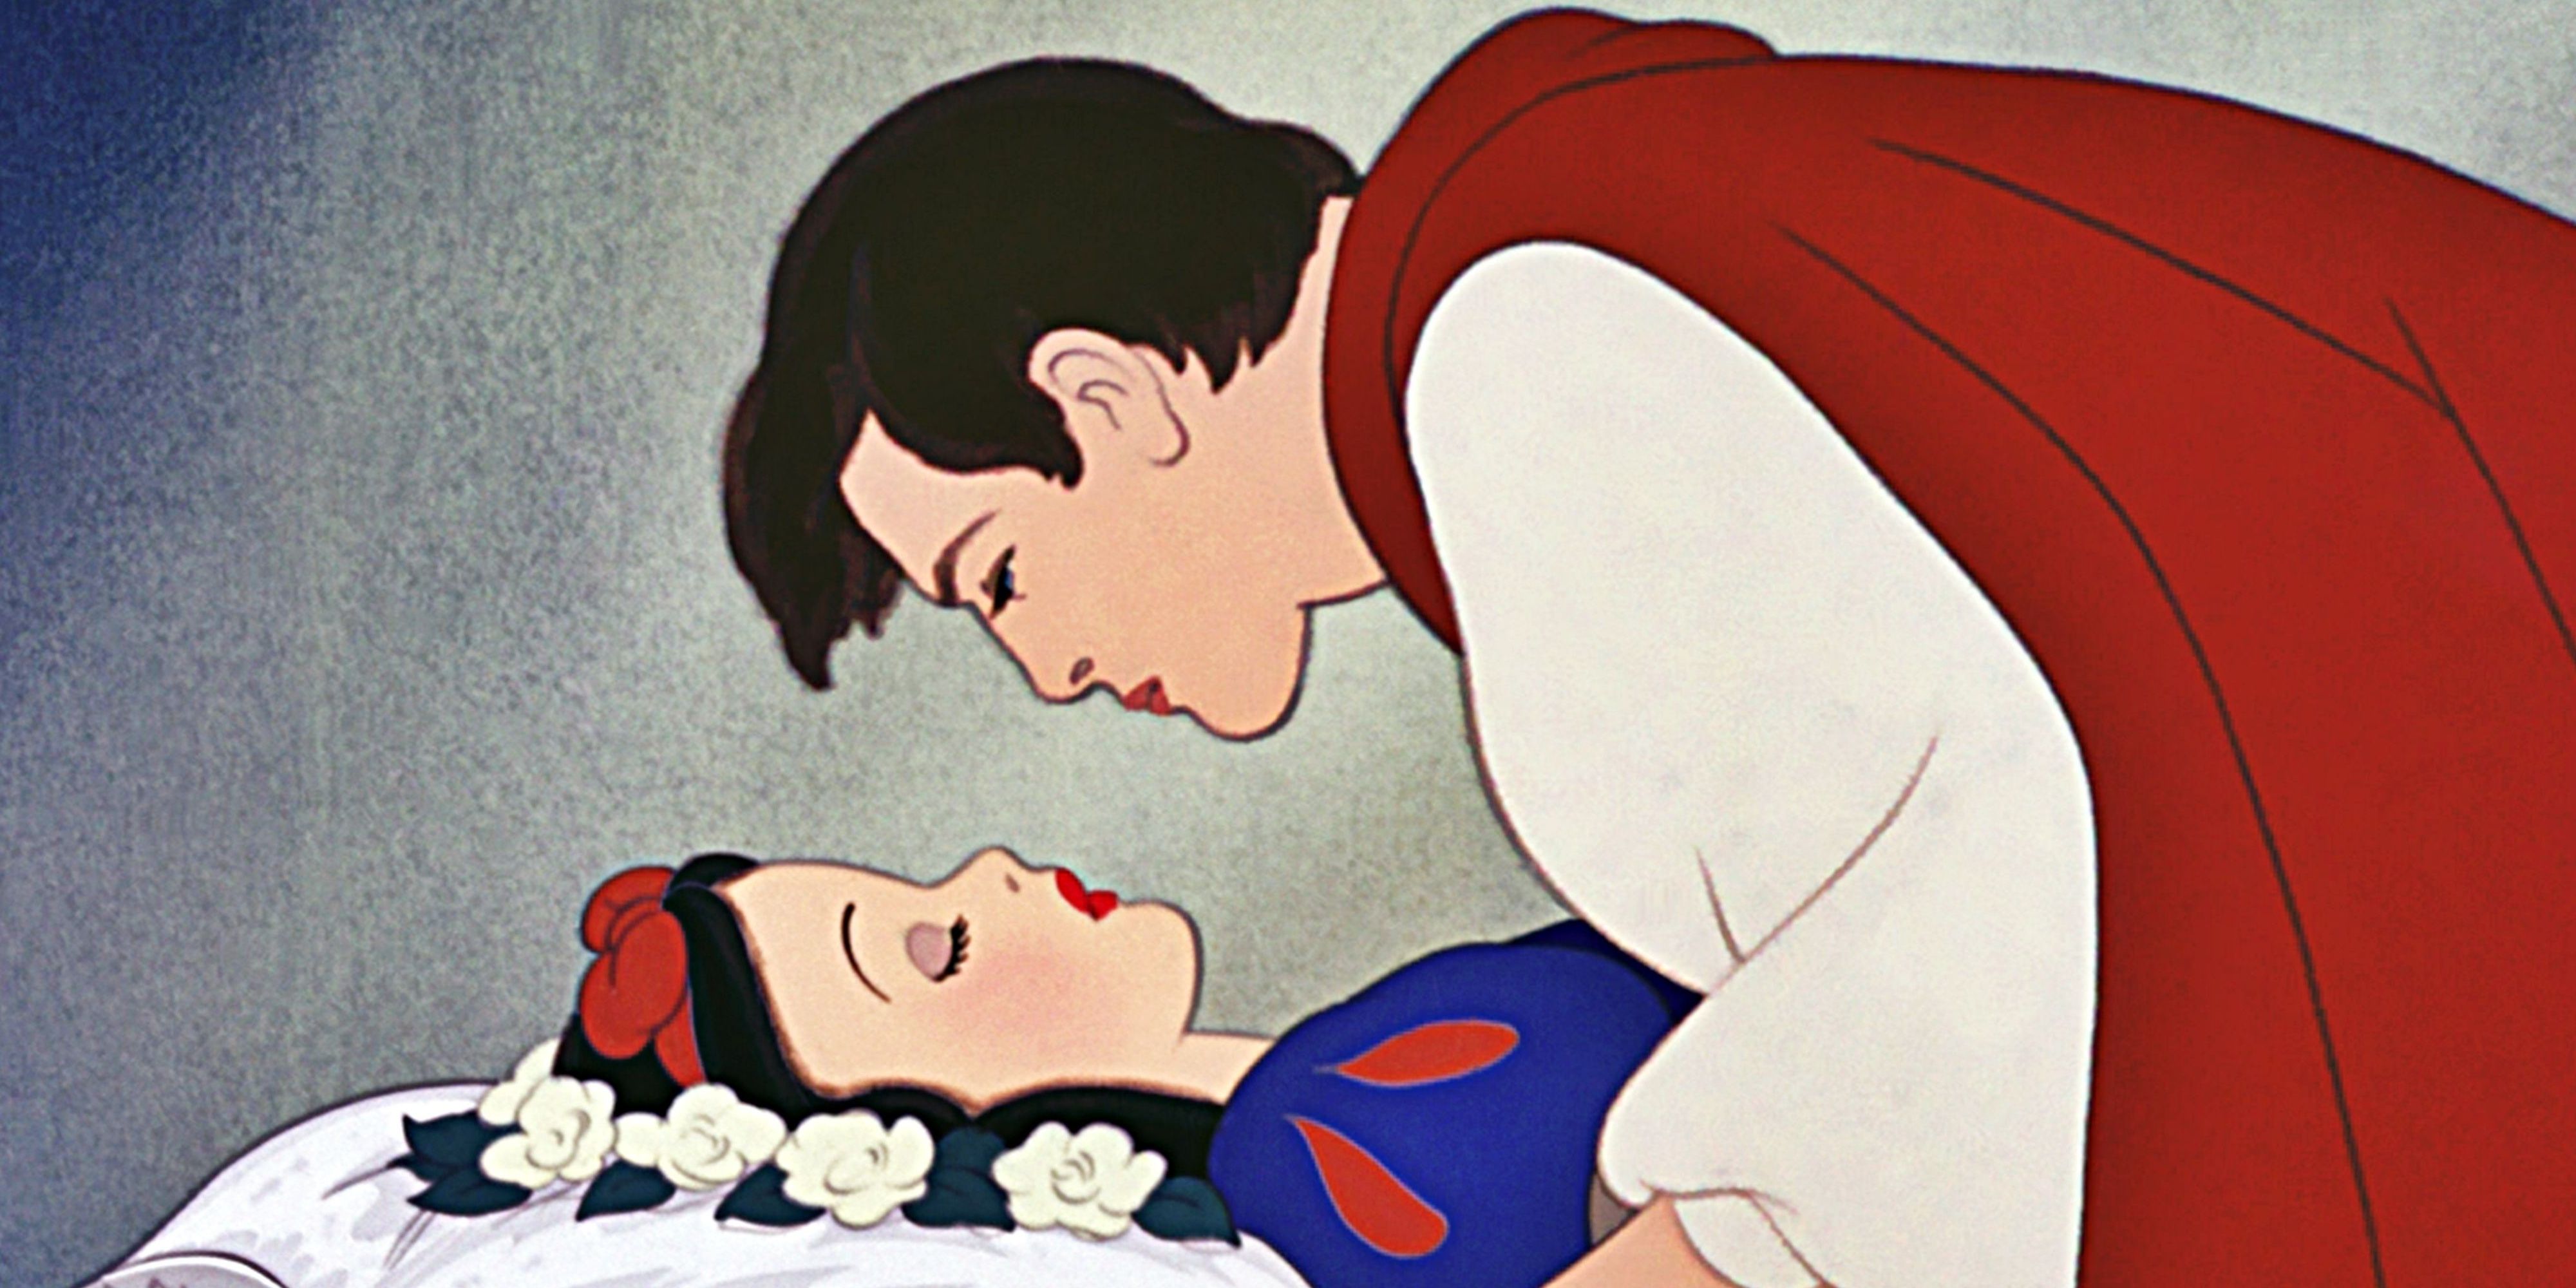 10 Shocking BTS Facts About Disney’s Original Snow White That Fans Didn’t Know